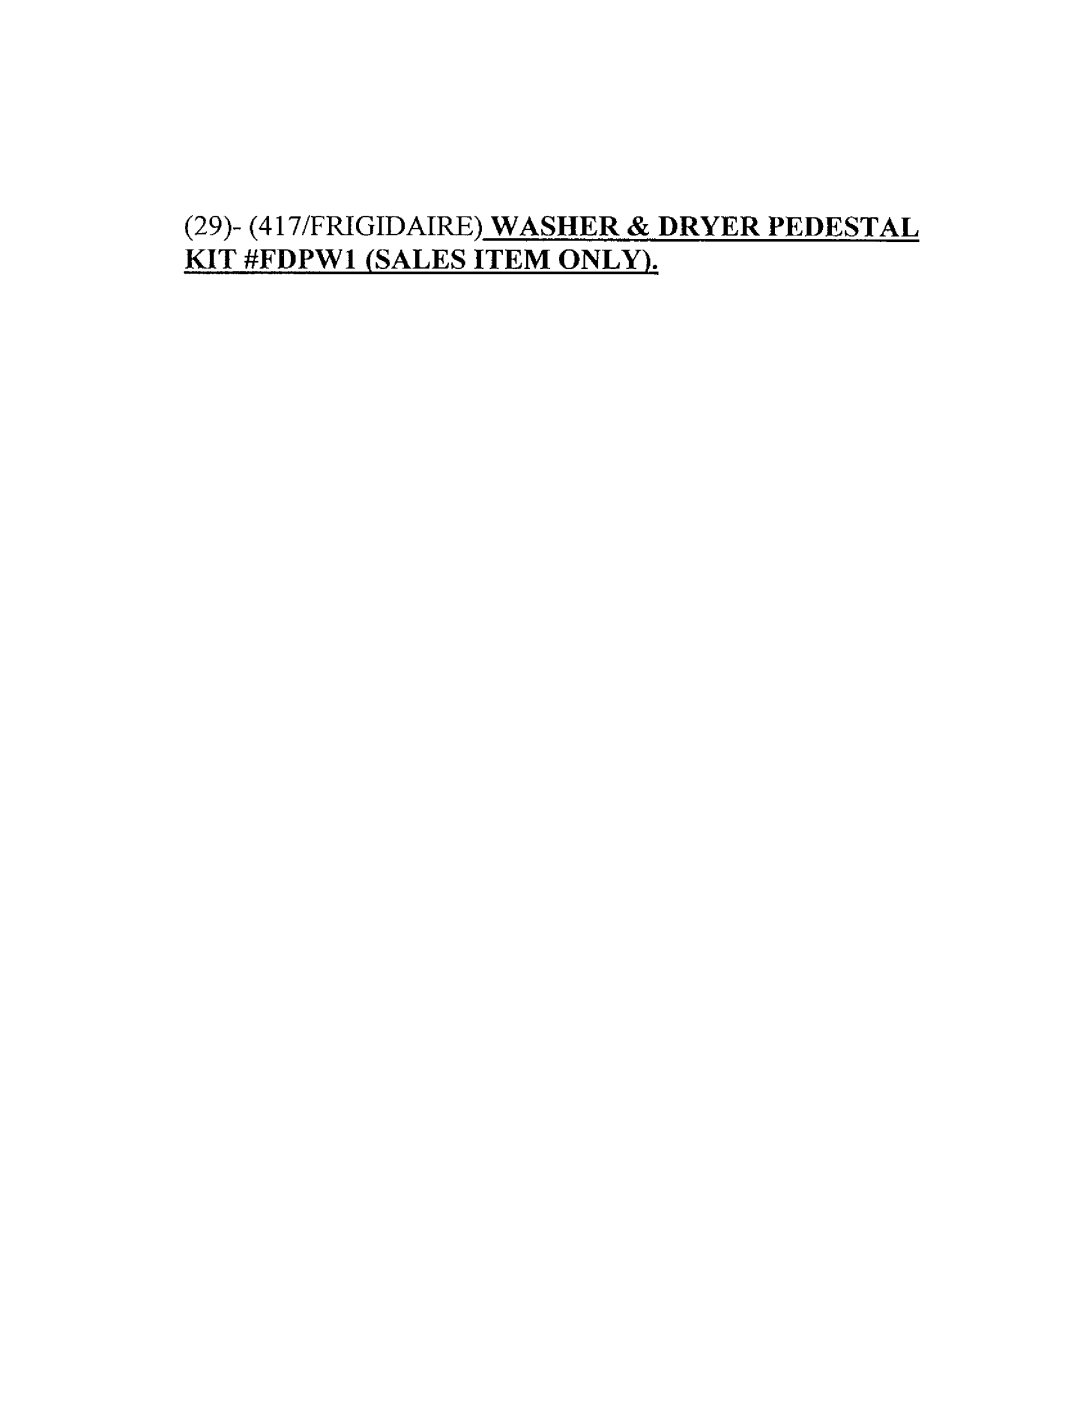 Frigidaire manual 29- 417/FRIGIDAIREWASHER & DRYER PEDESTAL KIT #FDPW1 SALES ITEM ONLY 